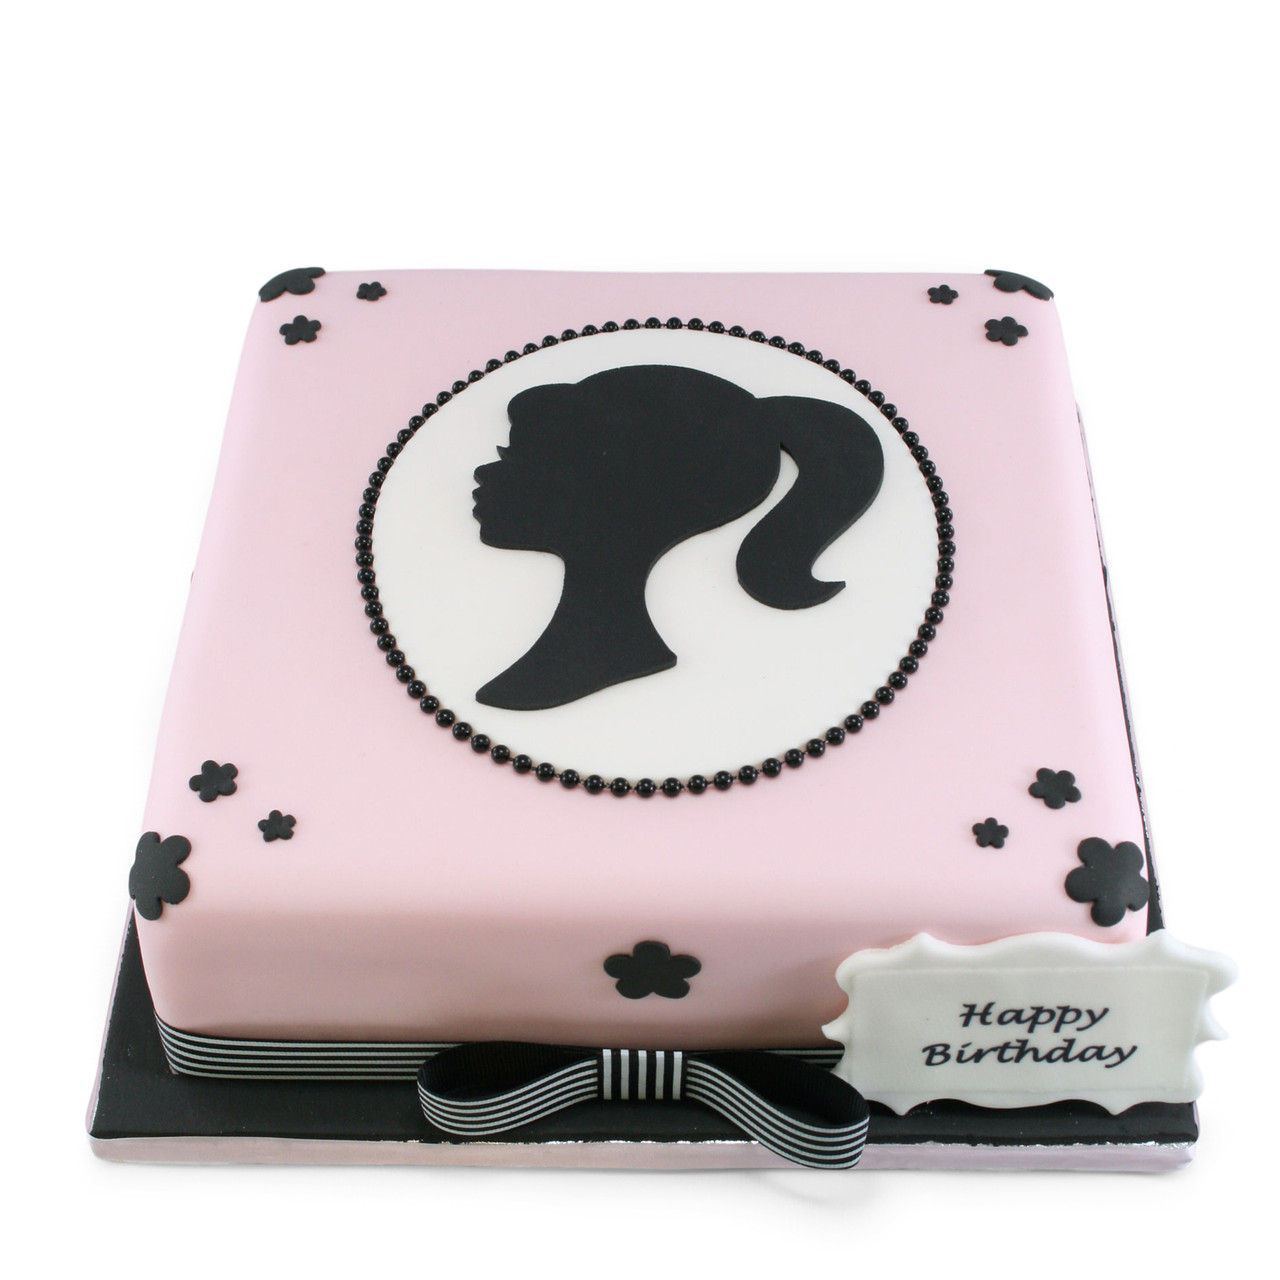 Barbie Dreamtopia PhotoCake® Image Stacked Cake Design | DecoPac